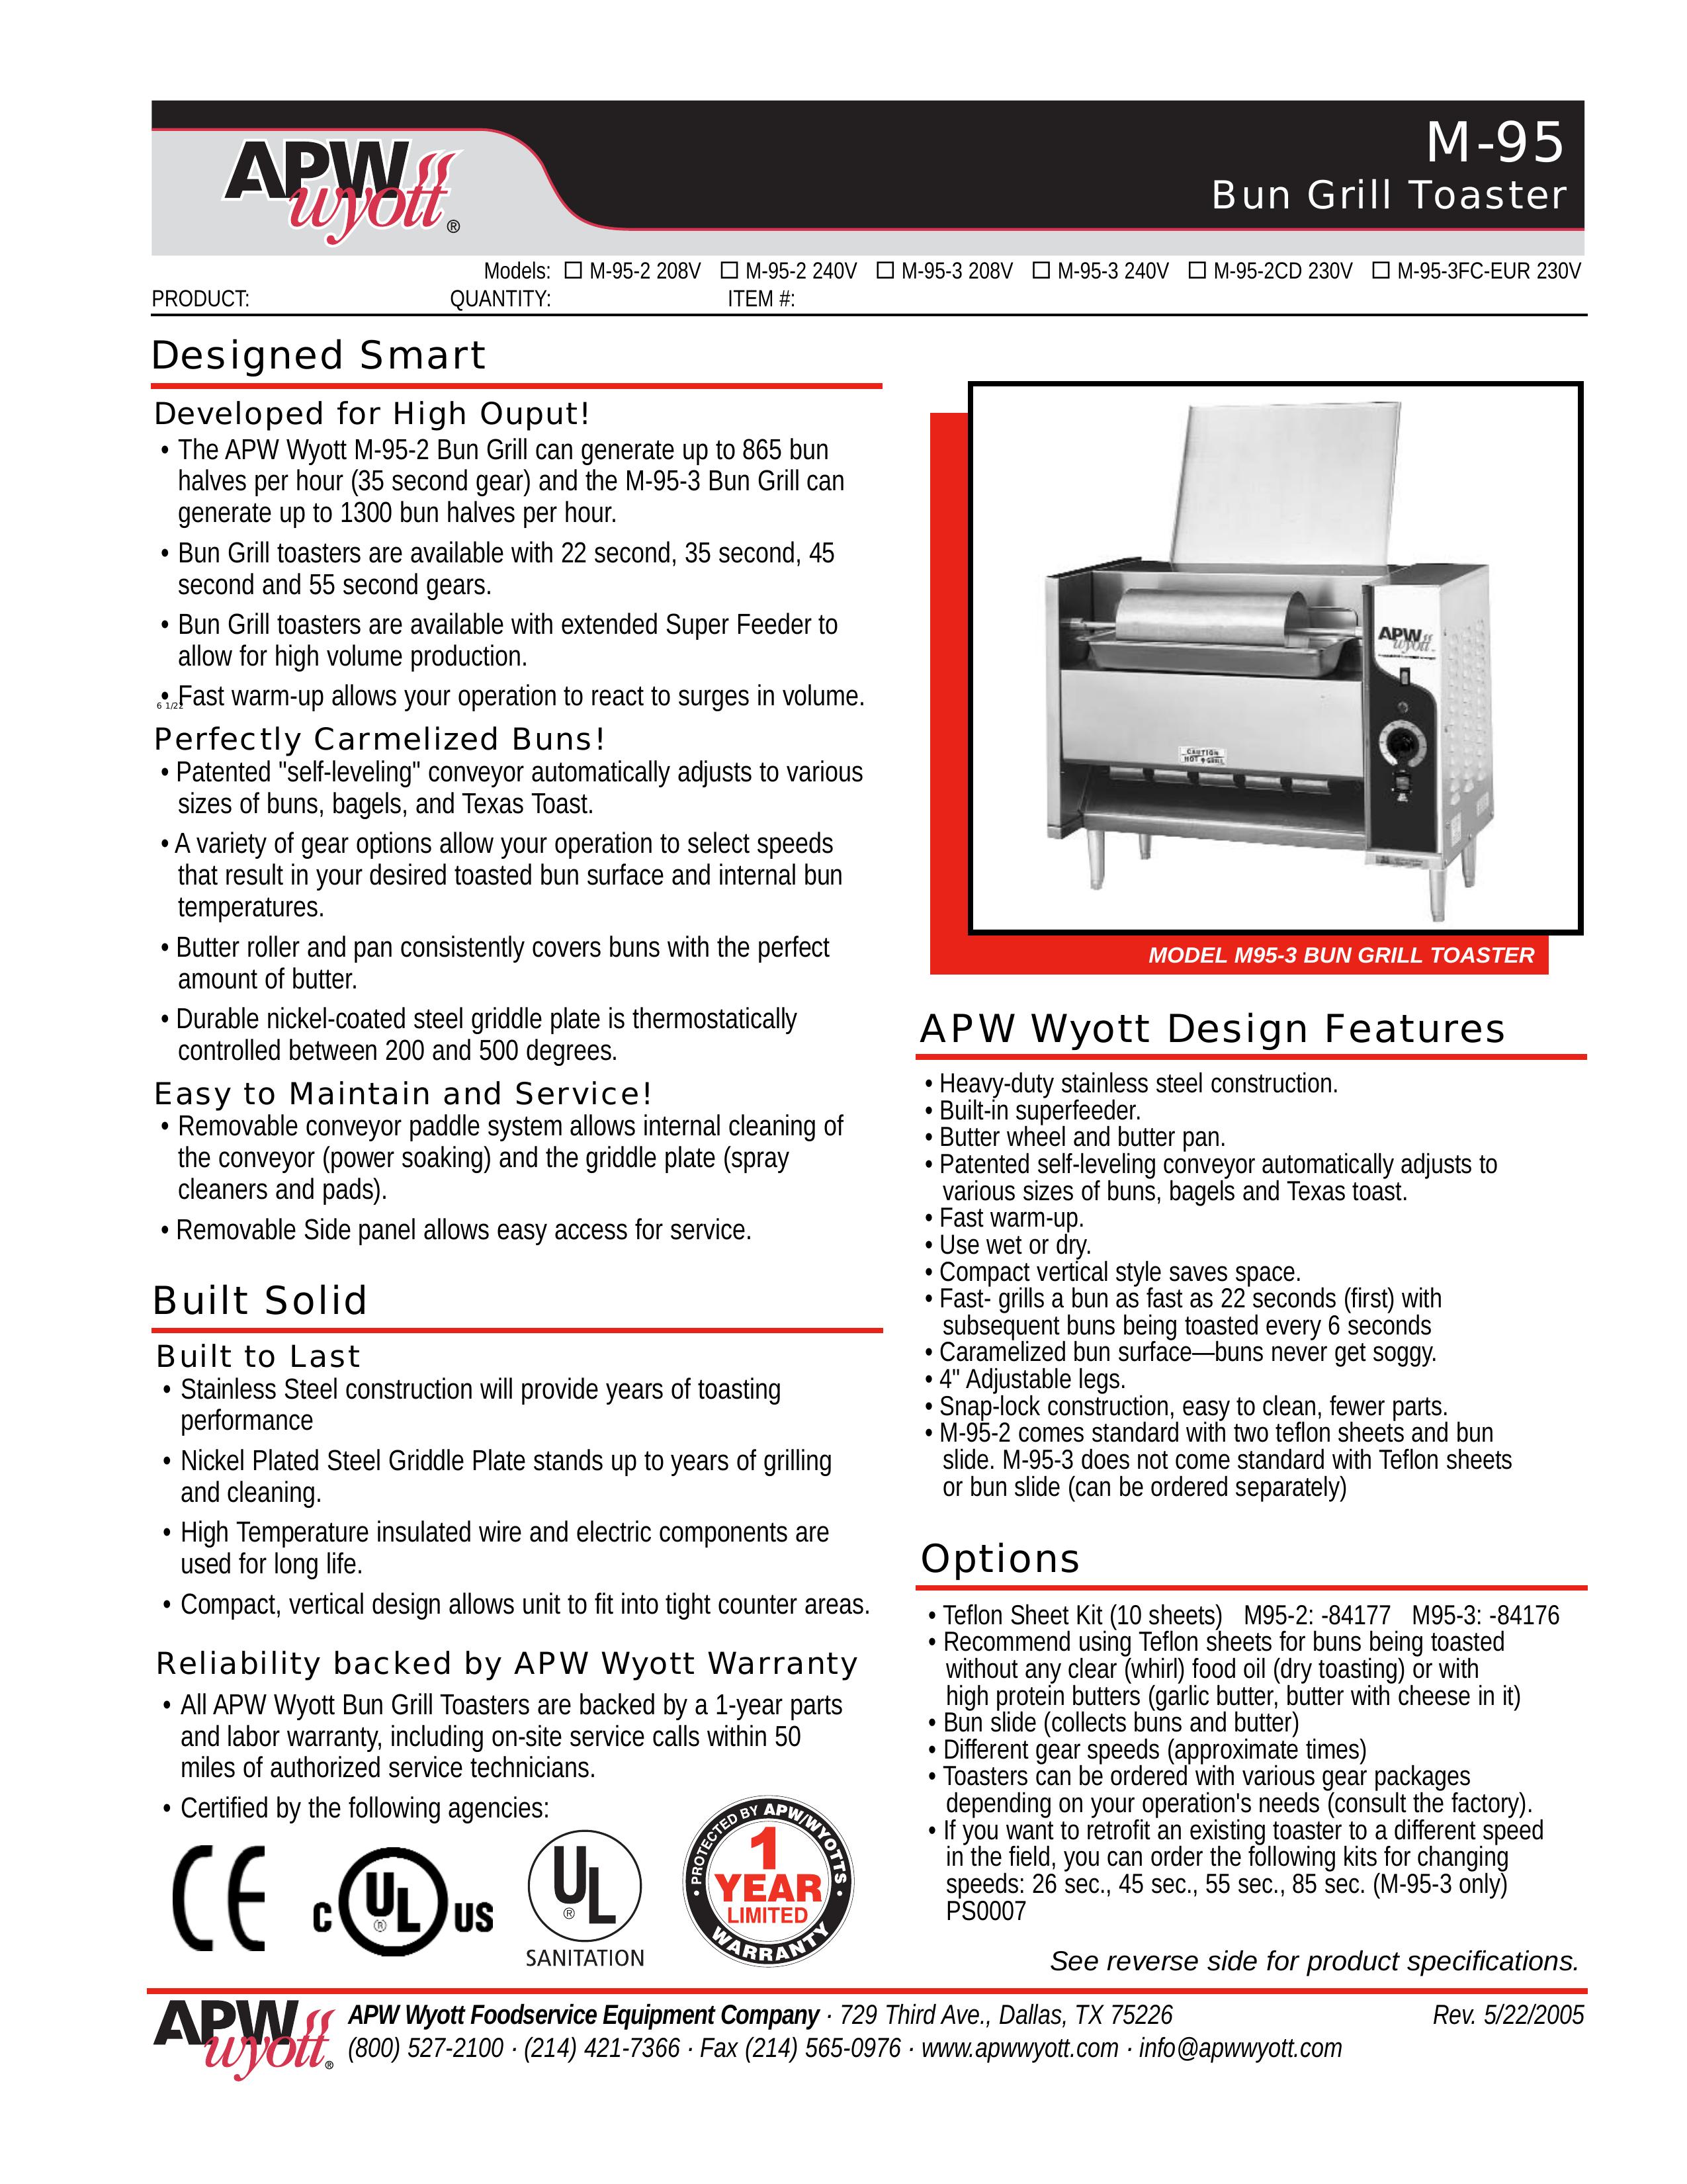 APW Wyott M-95-3 208V Toaster User Manual